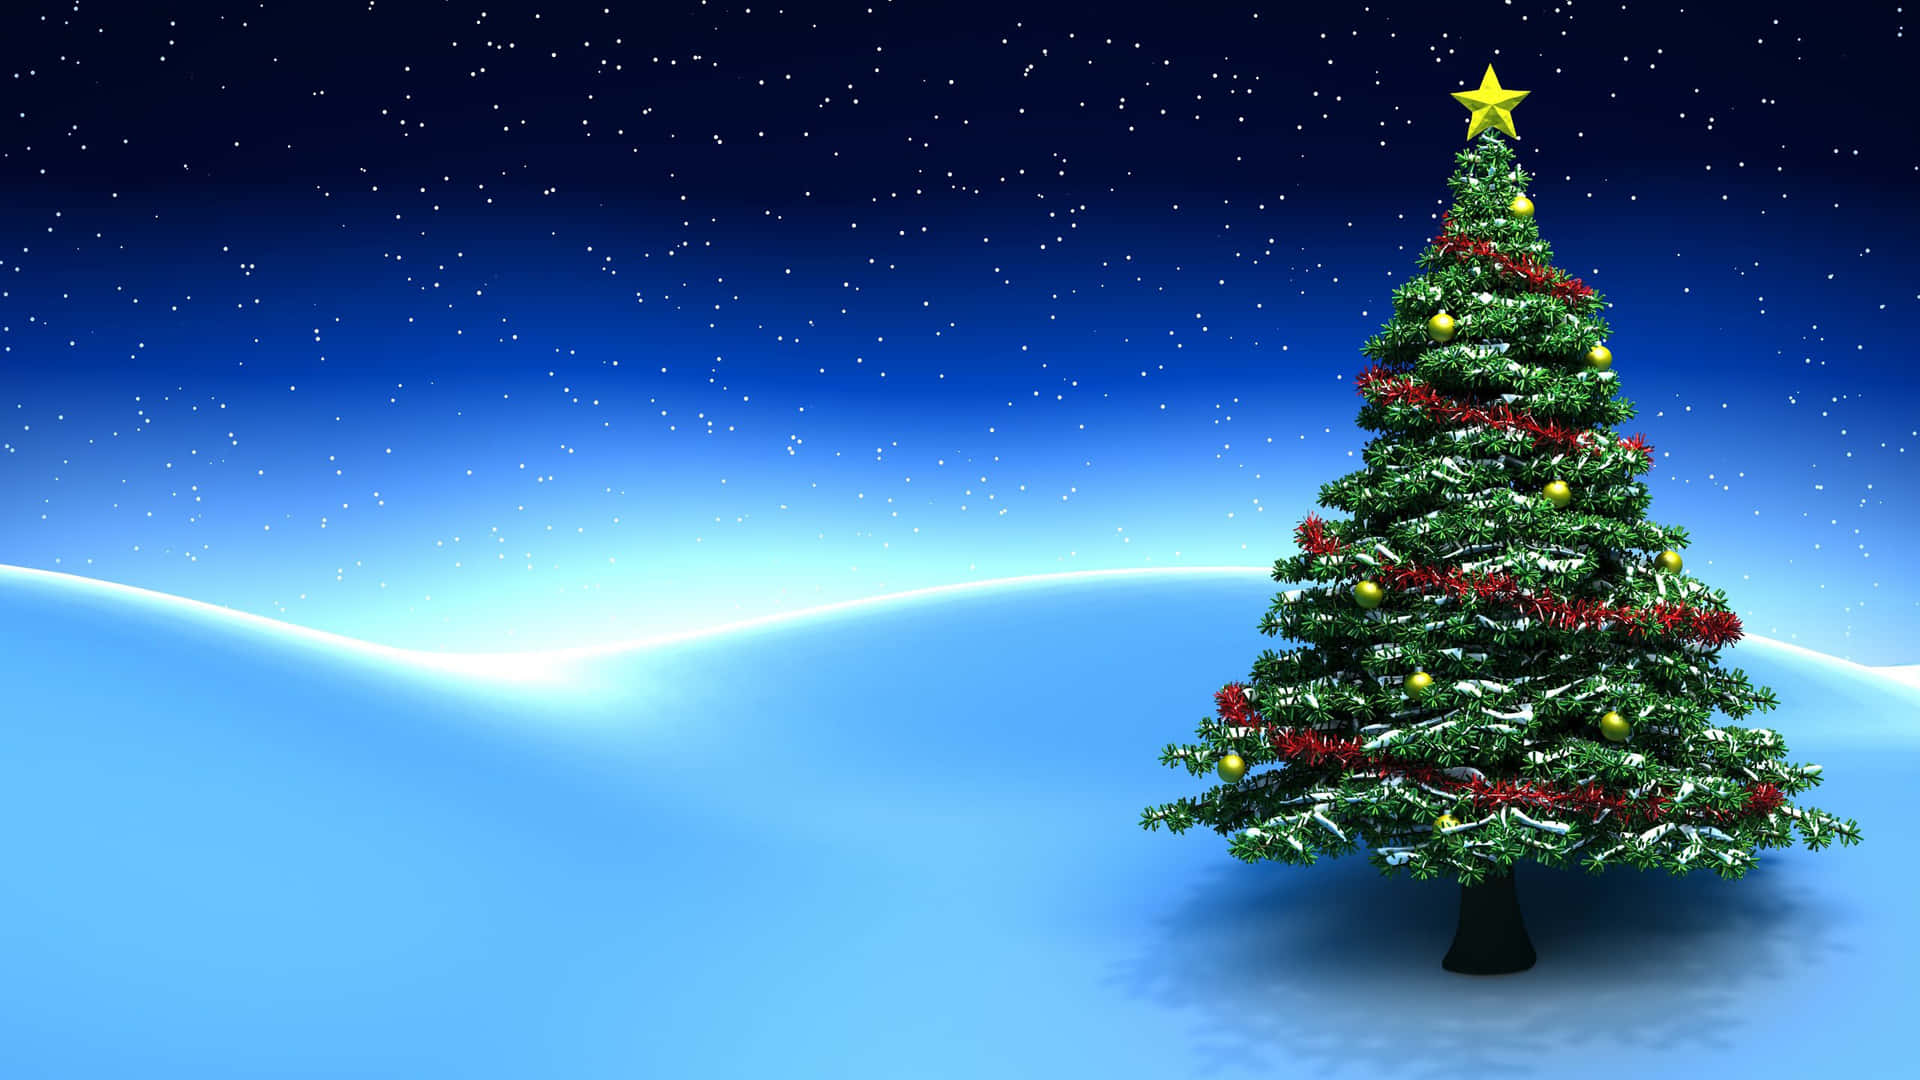 Celebrate the festive season with a Christmas Tree